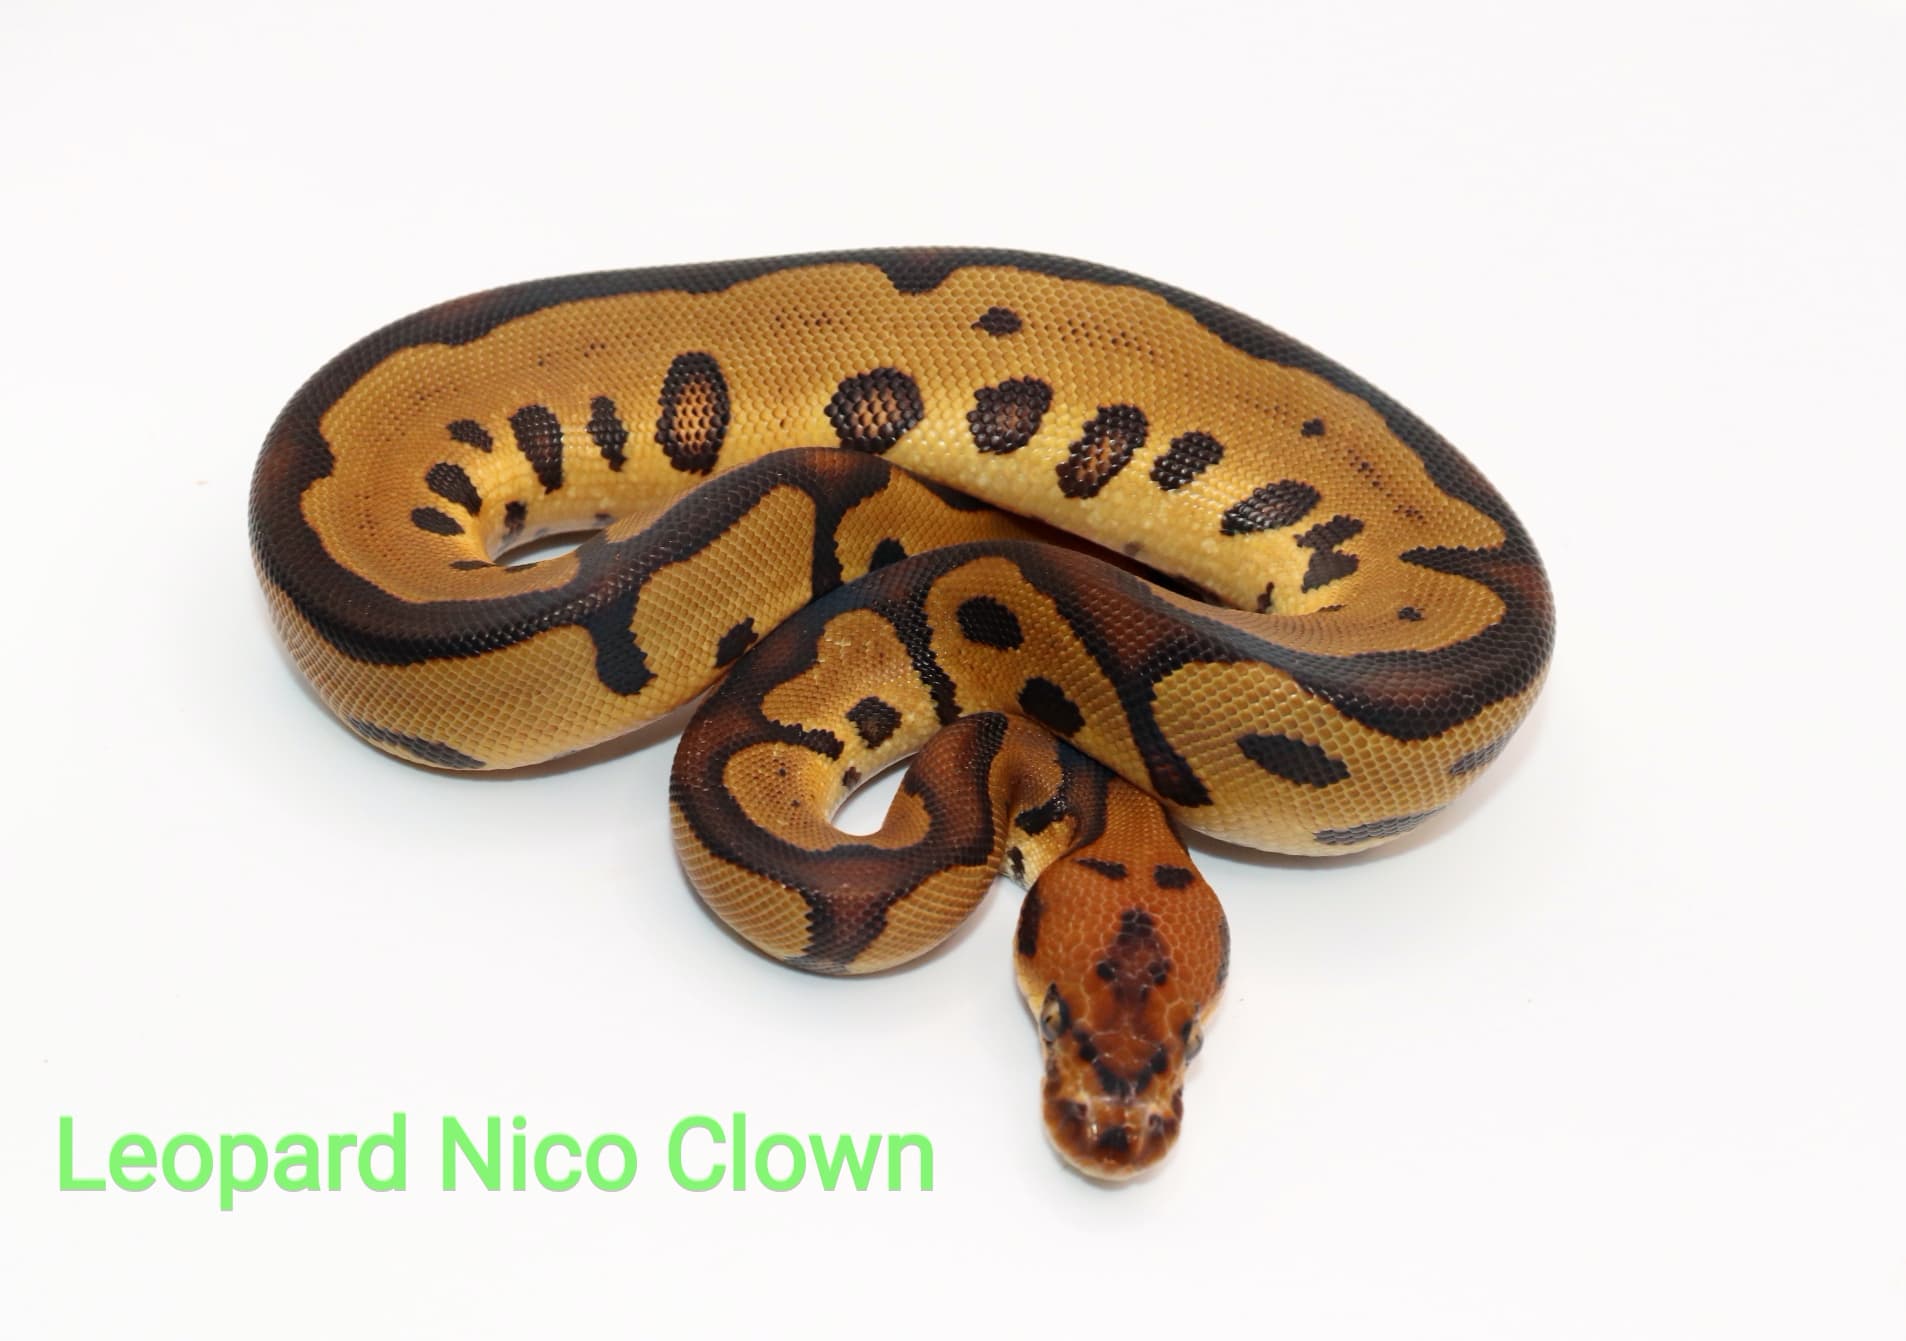 Leopard Nico Clown by DNJ Pythons